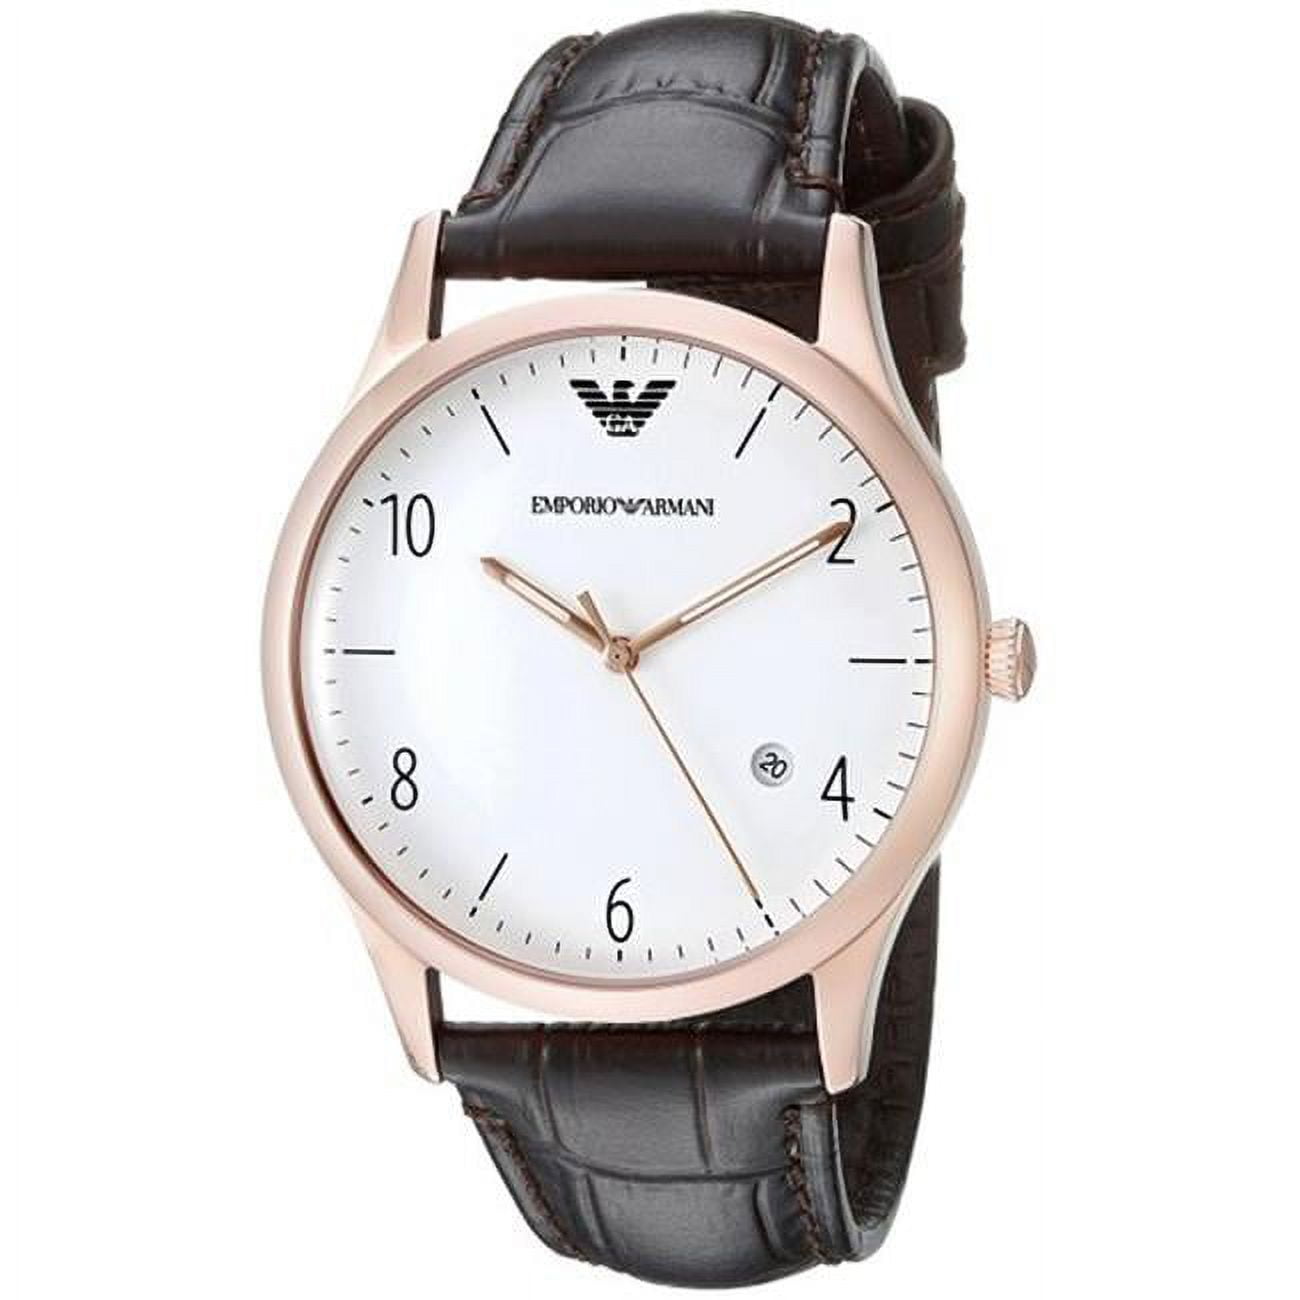 Emporio Armani Men's AR1915 Rose Gold-Tone Watch - White Dial - Walmart.com